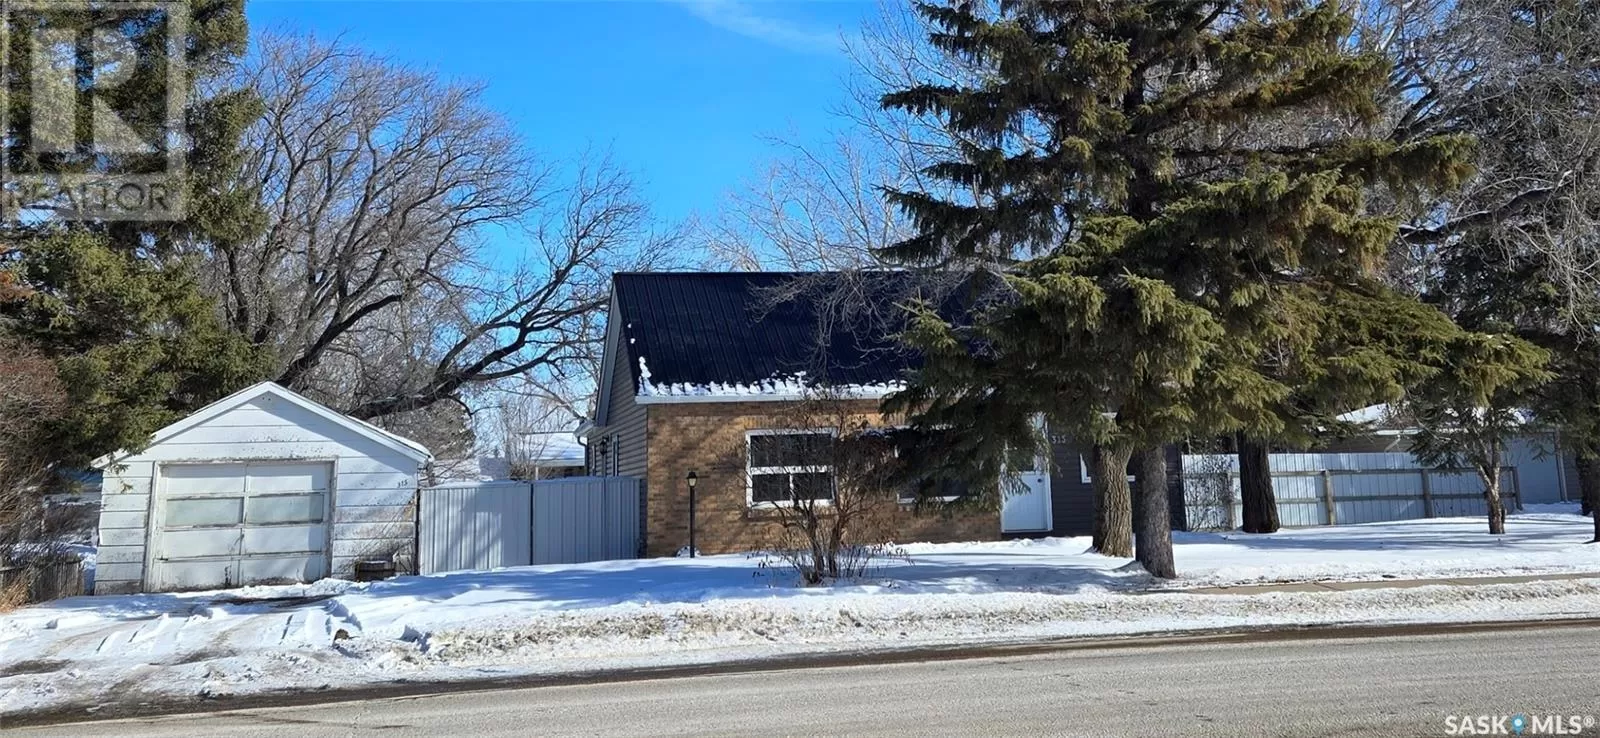 House for rent: 315 Government Road, Stoughton, Saskatchewan S0G 4T0